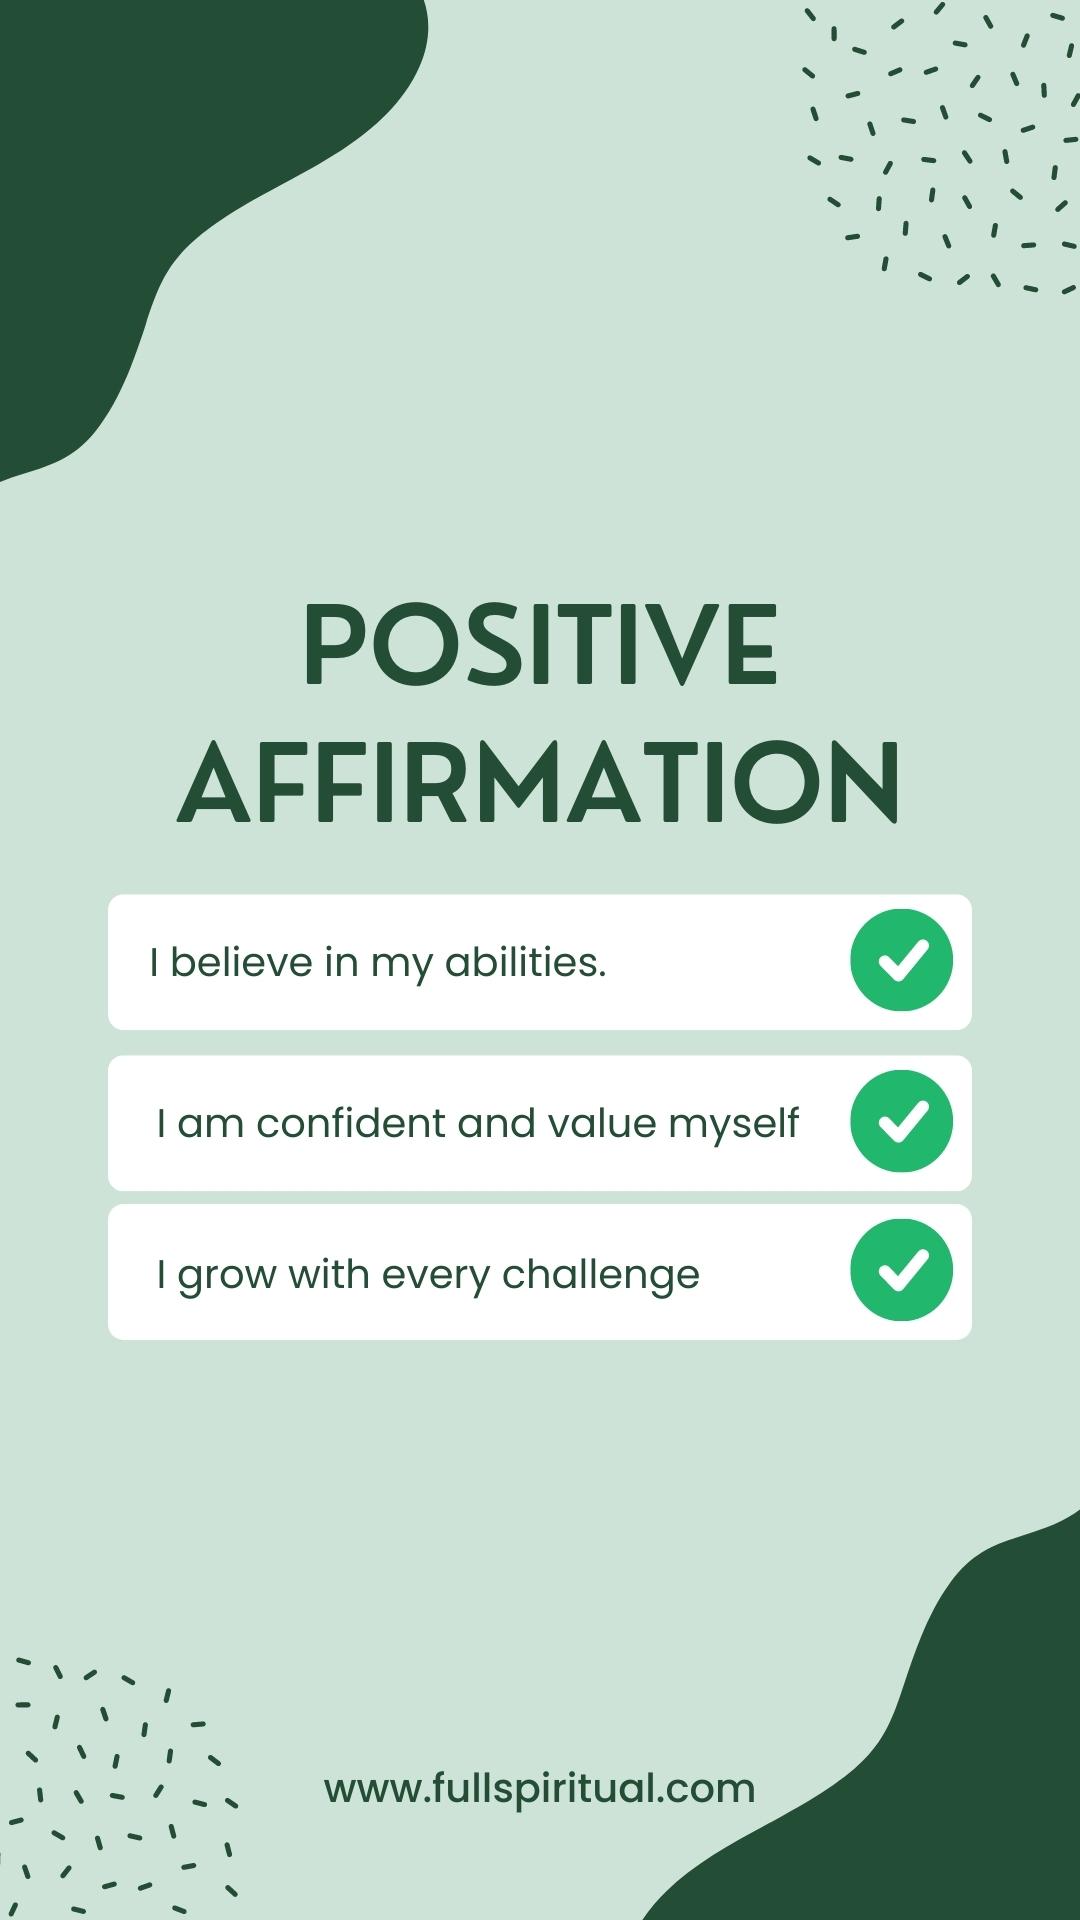 positive affirmations